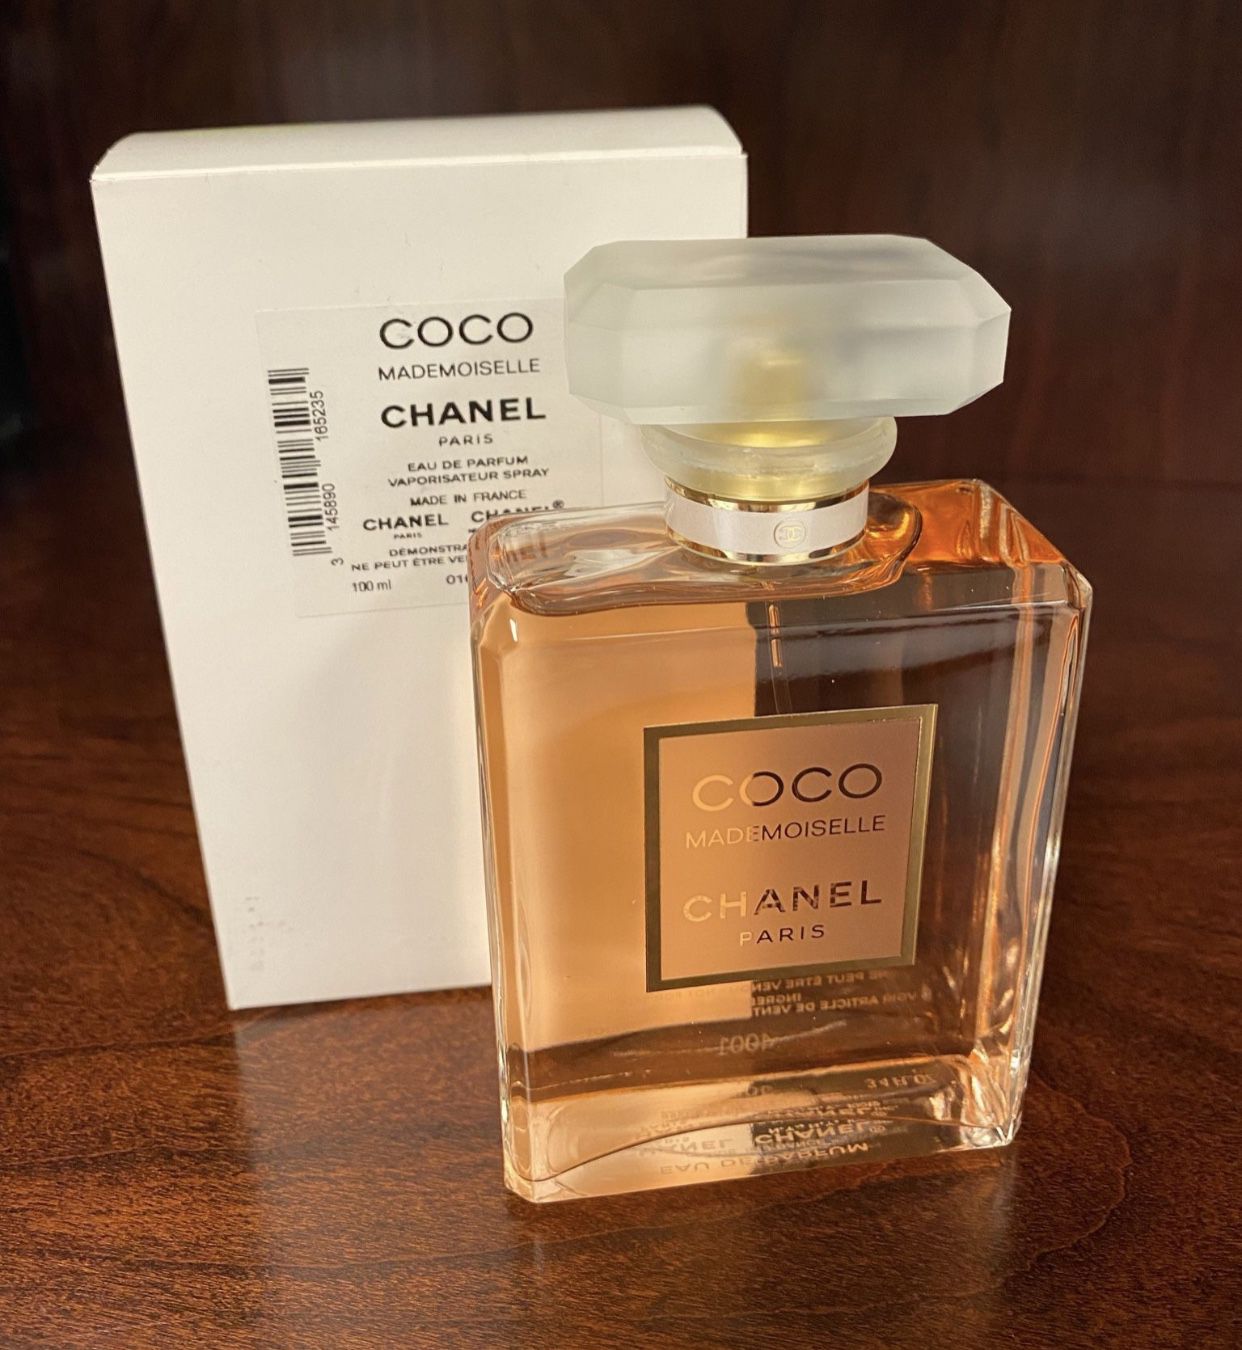 COCO MADEMOISELLE Eau de Parfum Twist and Spray (EDP) - 3x0.7 FL. OZ.